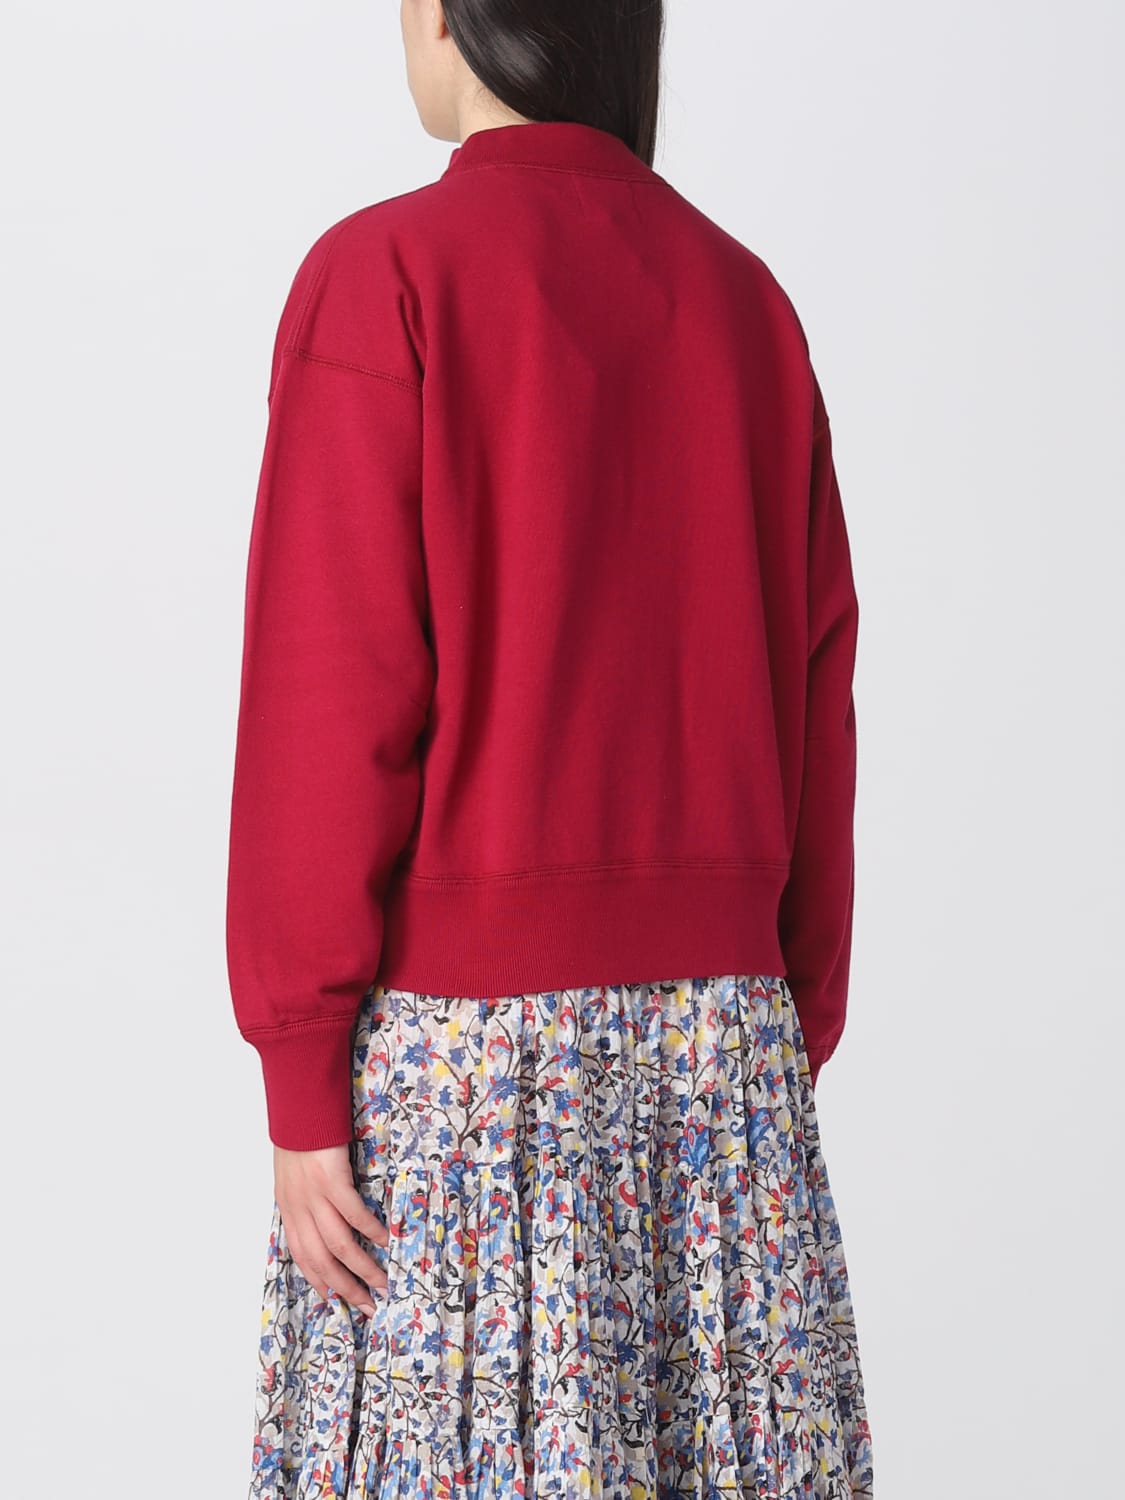 ISABEL MARANT ETOILE: sweatshirt in cotton blend - Red | Isabel Marant ...